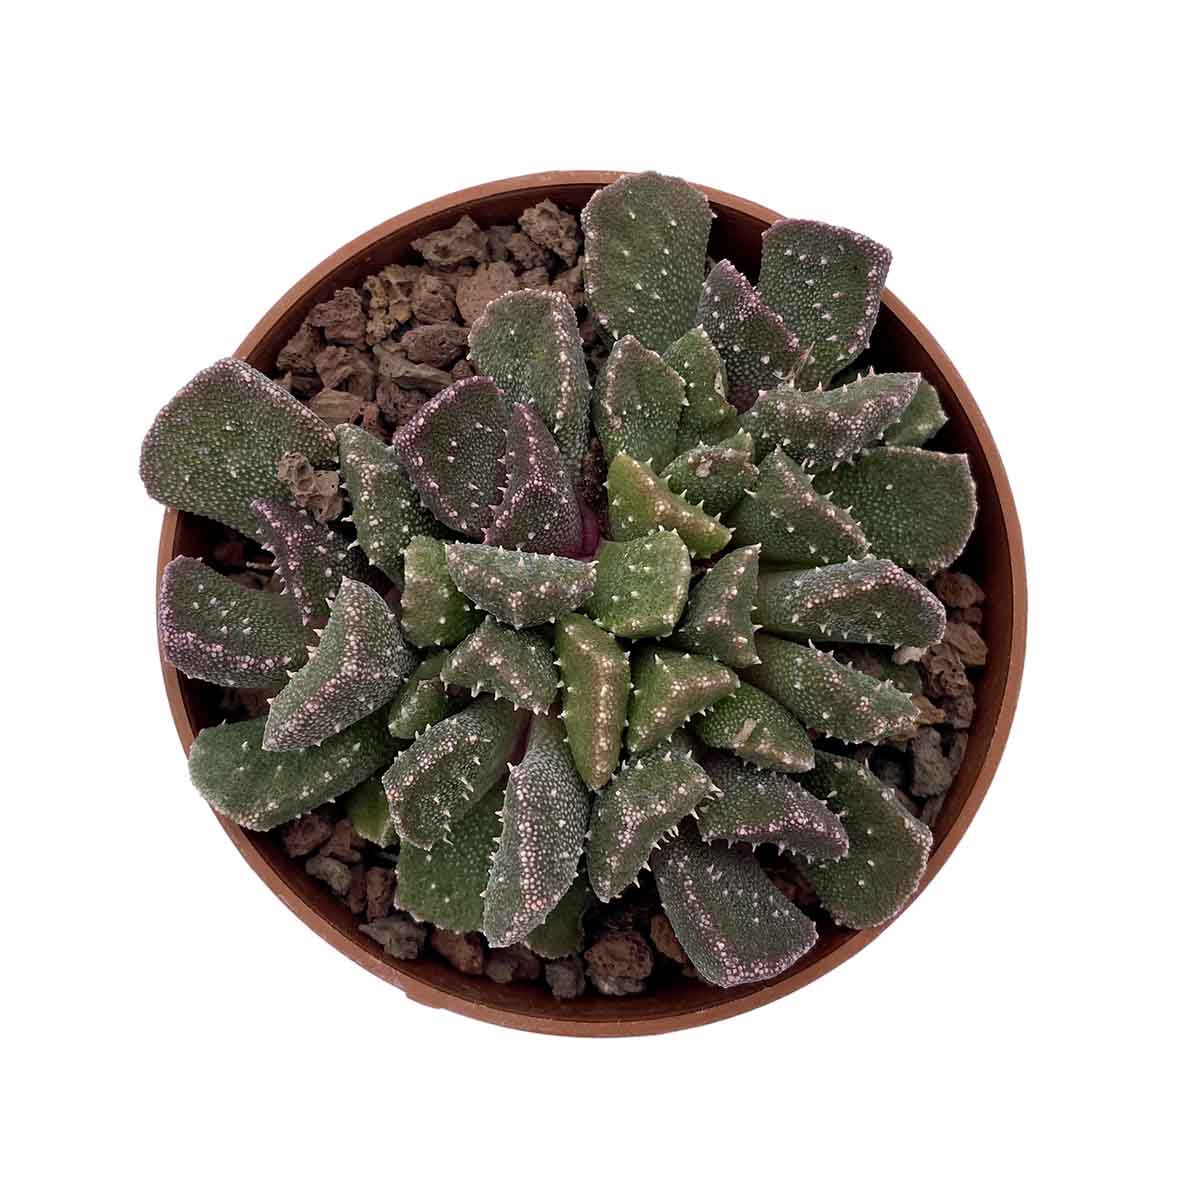 https://bo.cactijardins.com/FileUploads/produtos/as-nossas-plantas/aloinopsis/cactijardins_aloinopsis_luckhoffi_ref2912.jpg